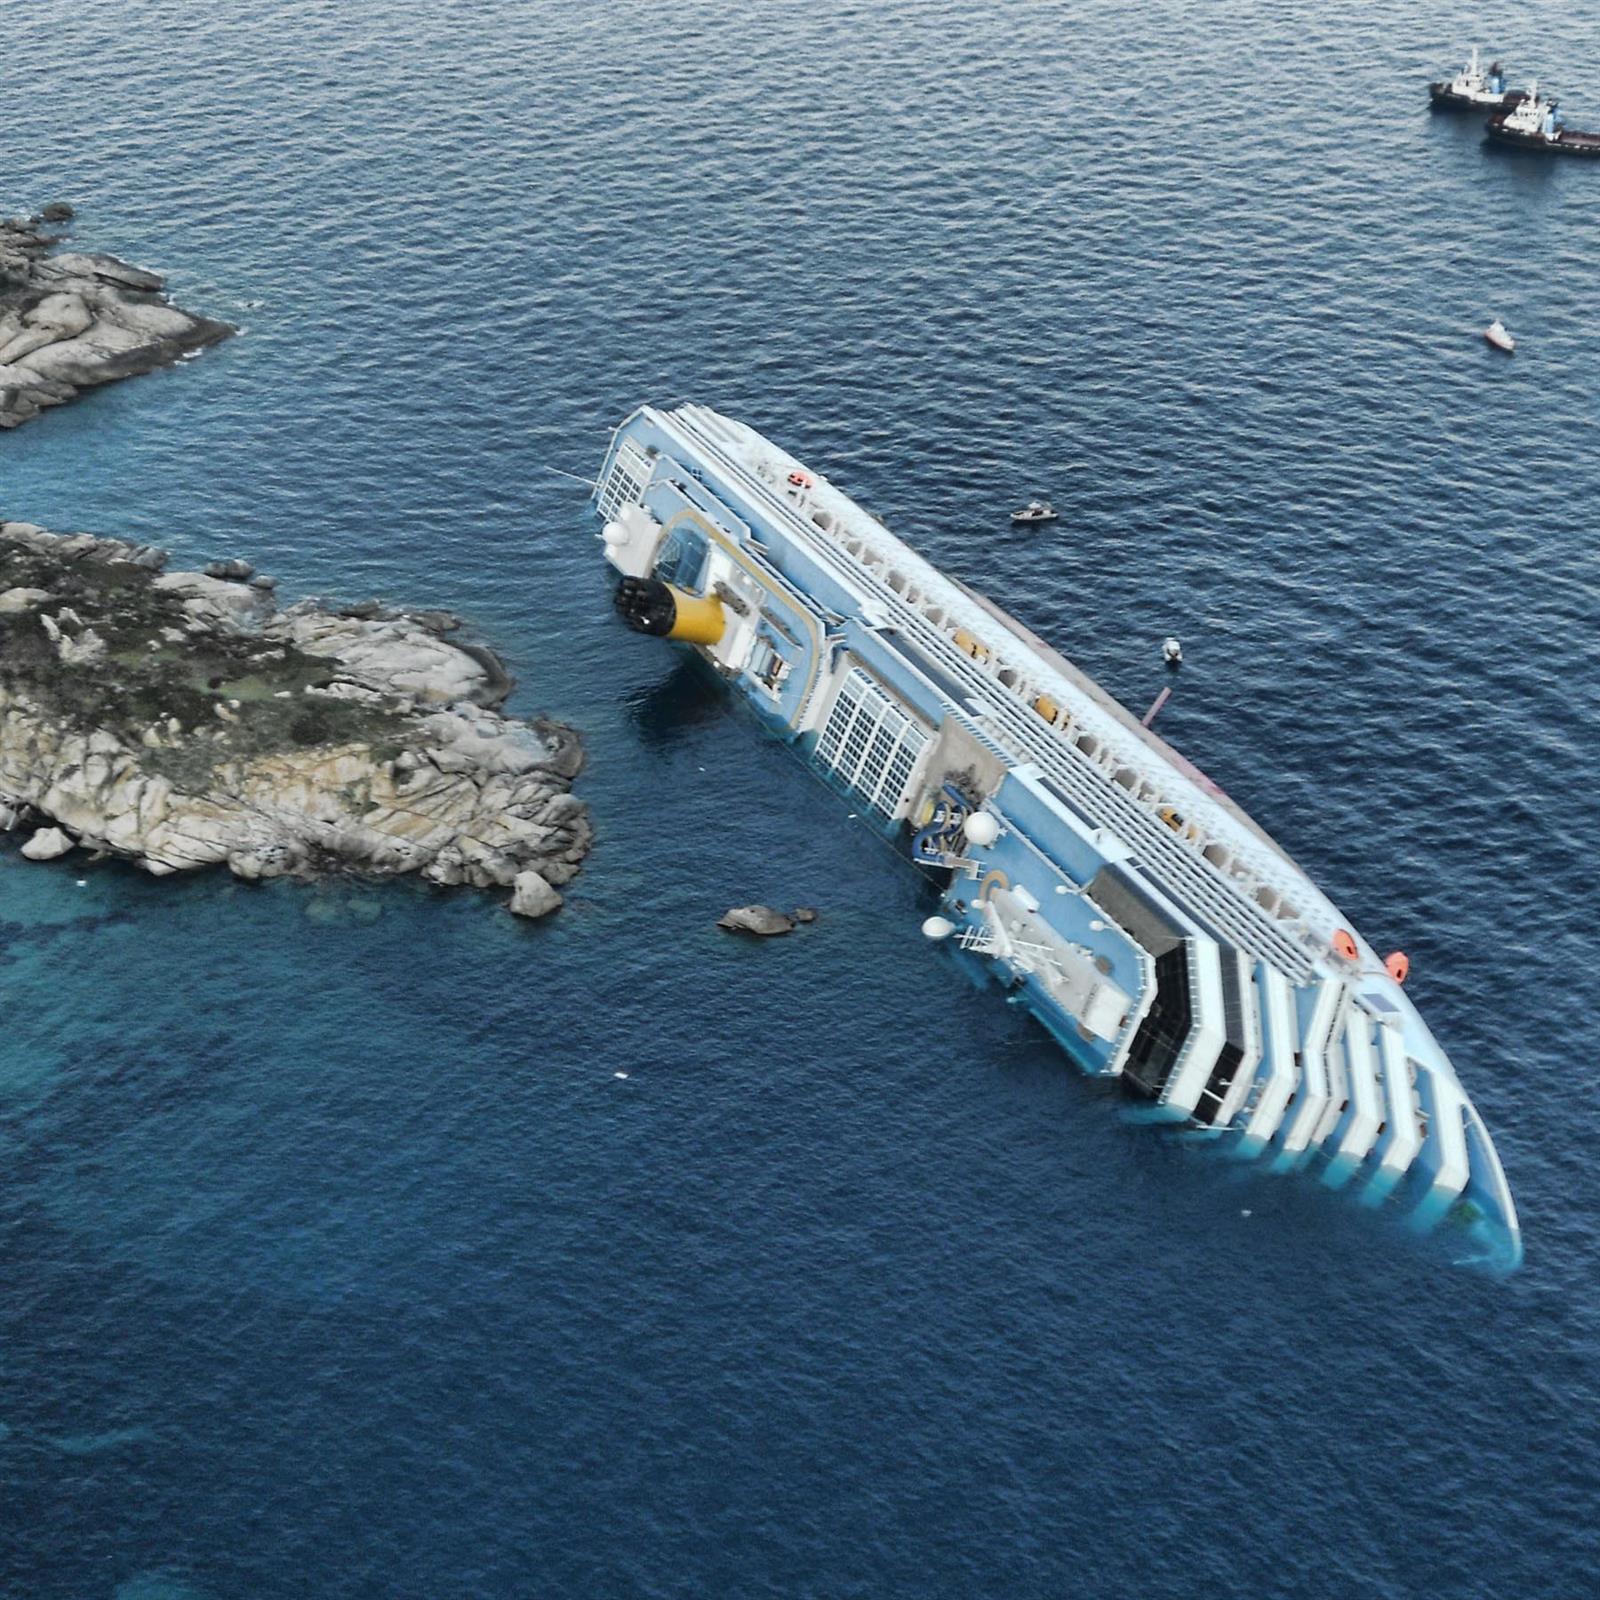 Cruise ship sinking